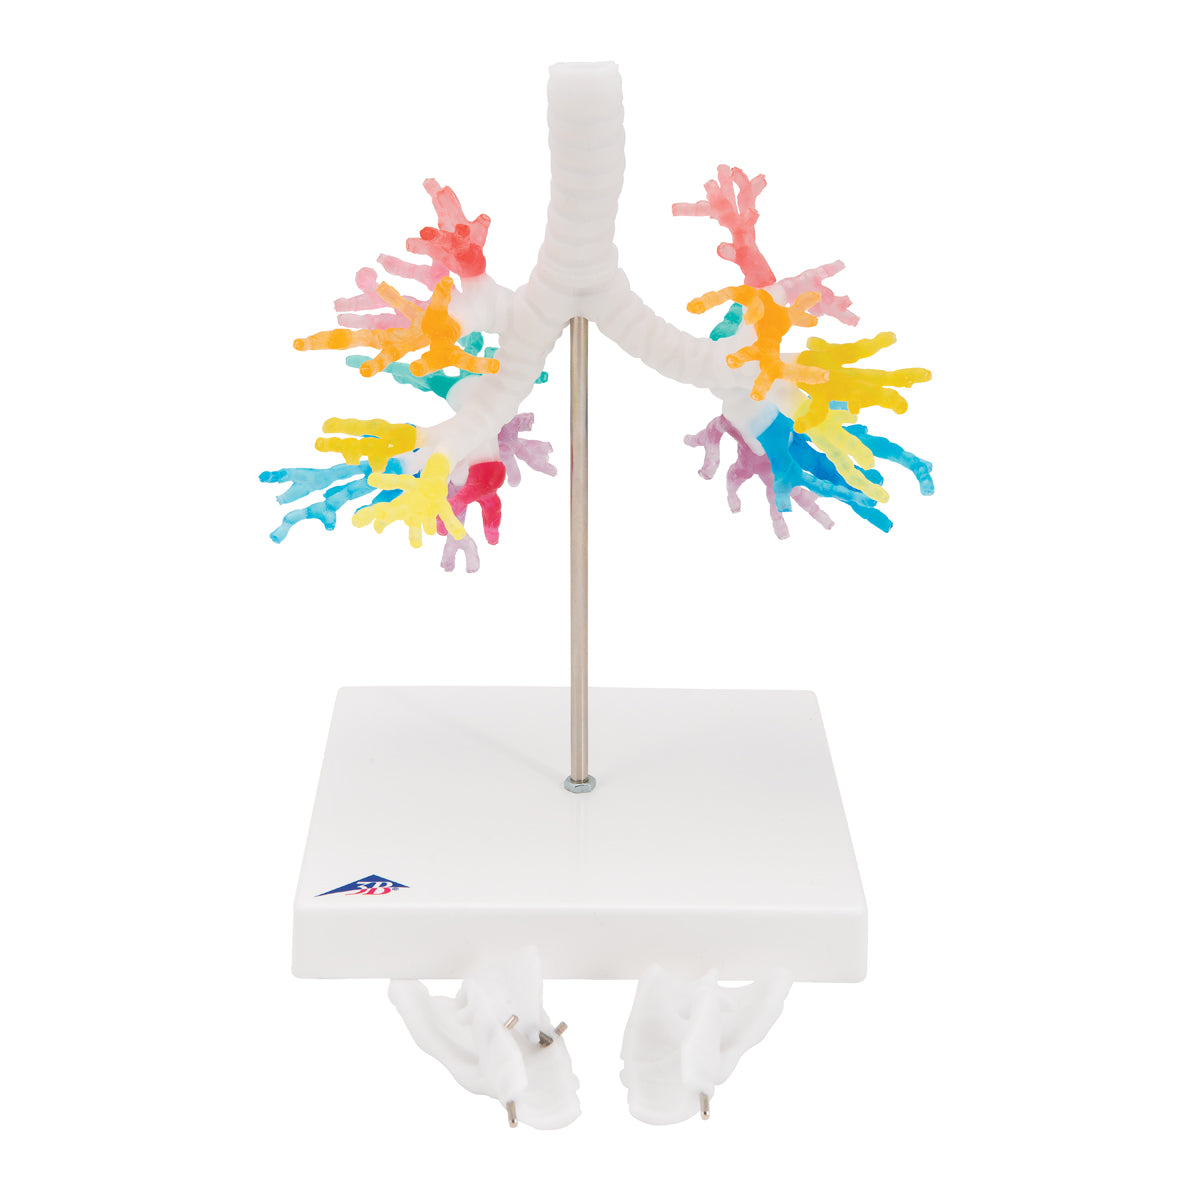 CT bronchi with larynx, 3D model via tomographic data